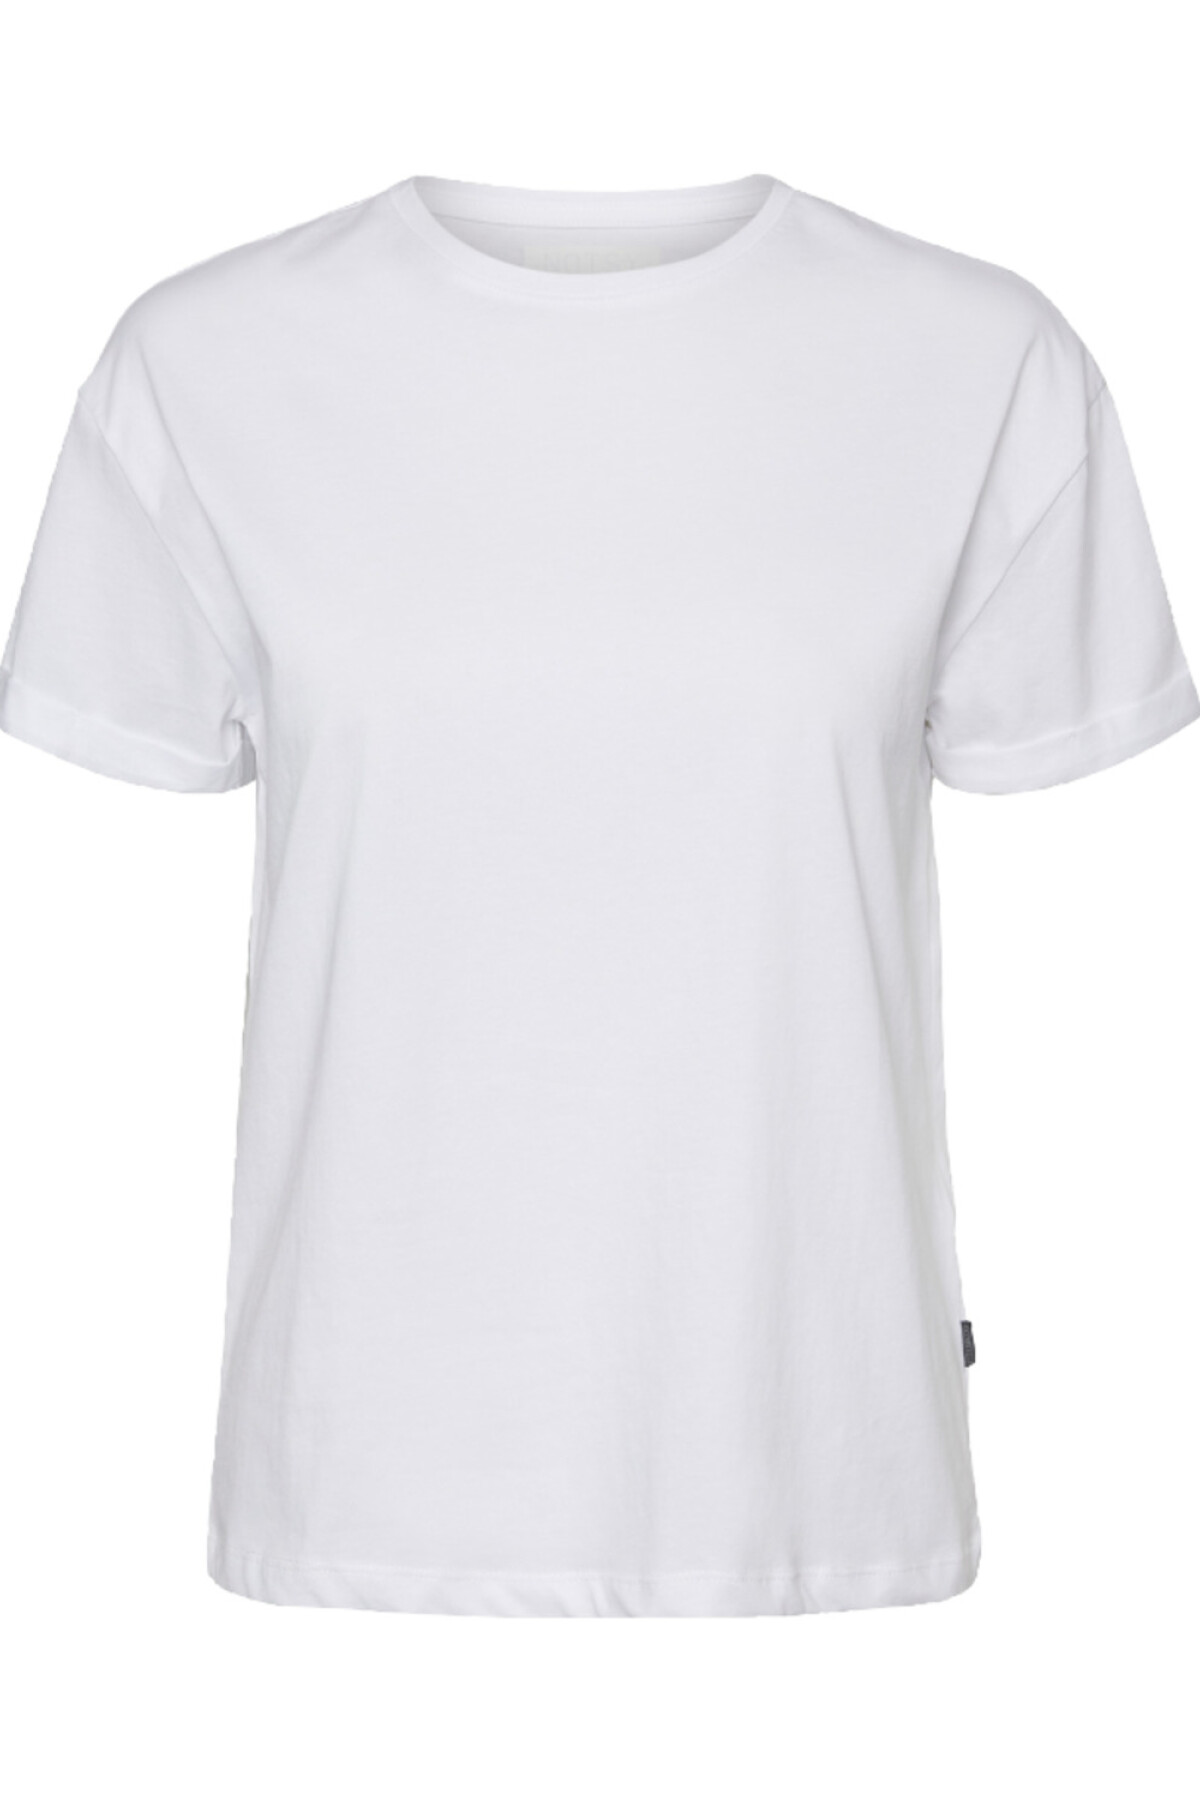 Camiseta Brandy Básica Bright White